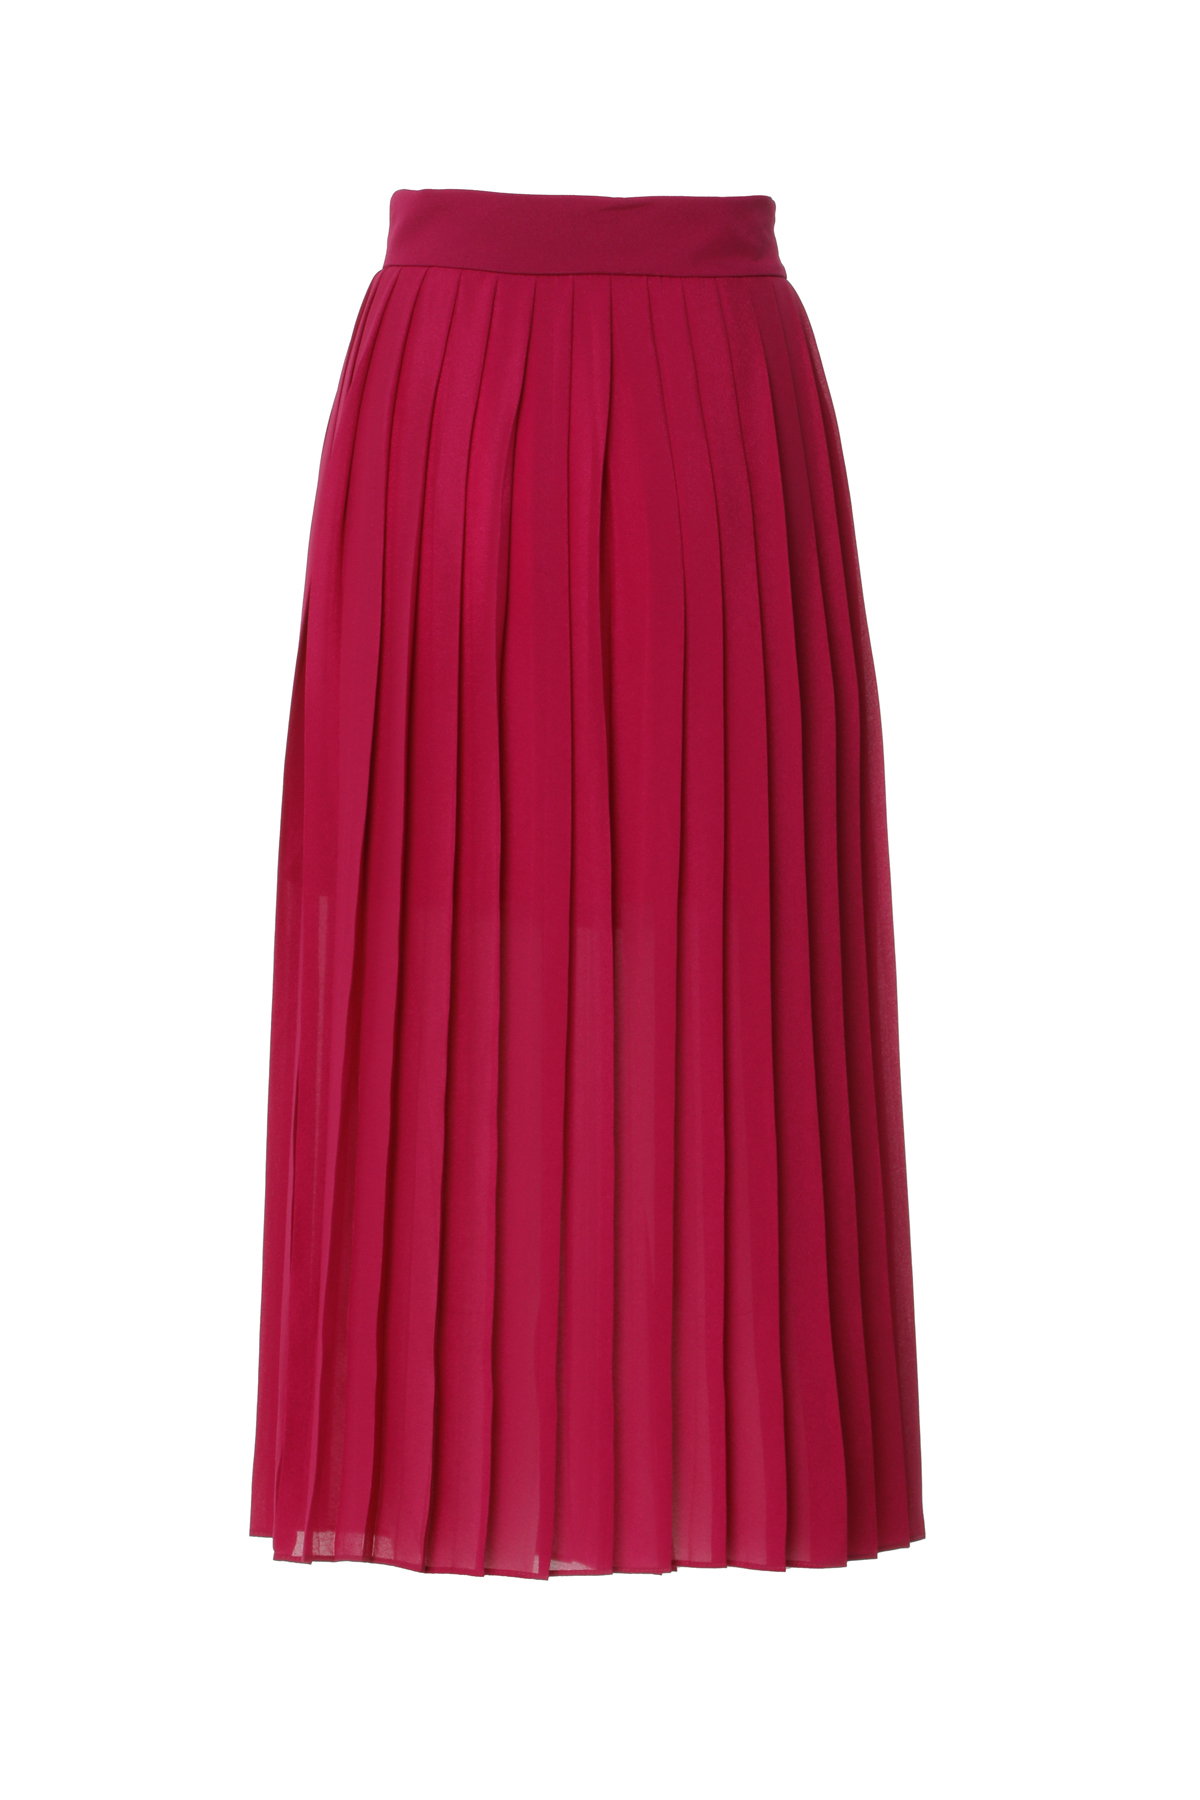 Pleated Pink Midi Skirt | Gizia